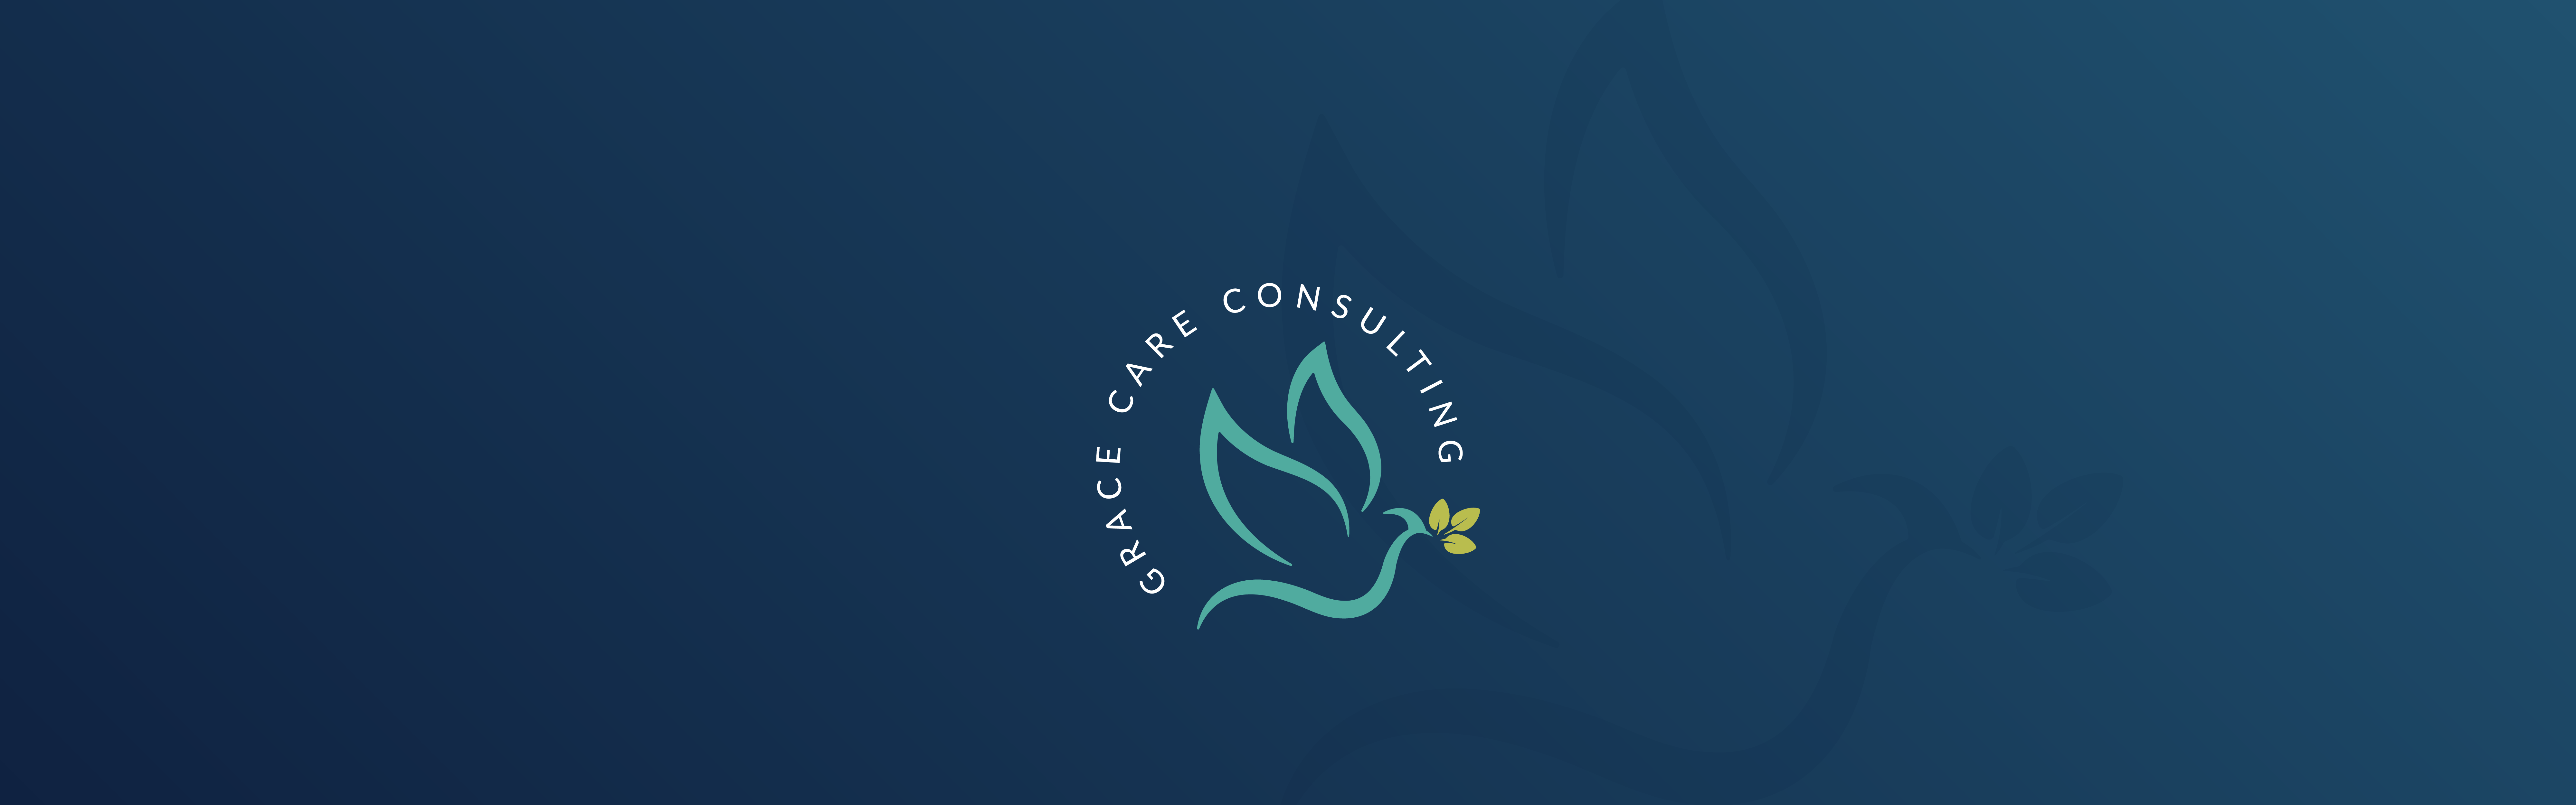 Grace Care Consulting logo design